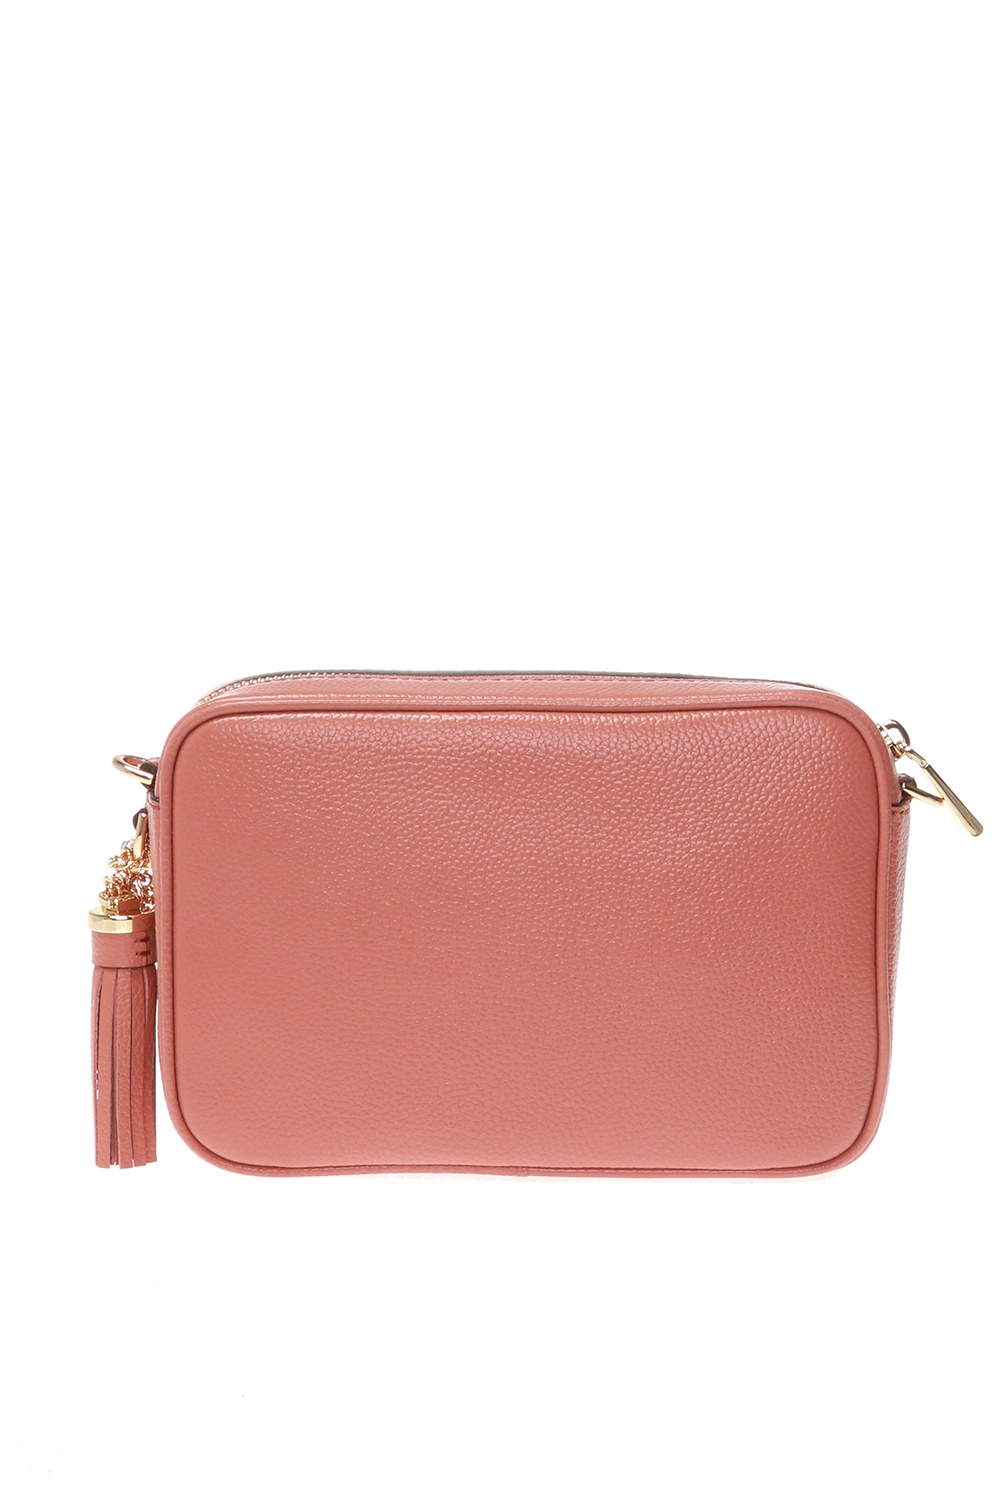 GenesinlifeShops GB - I love the pink bag - Brown 'Jet Set' shoulder bag  Michael Michael Kors